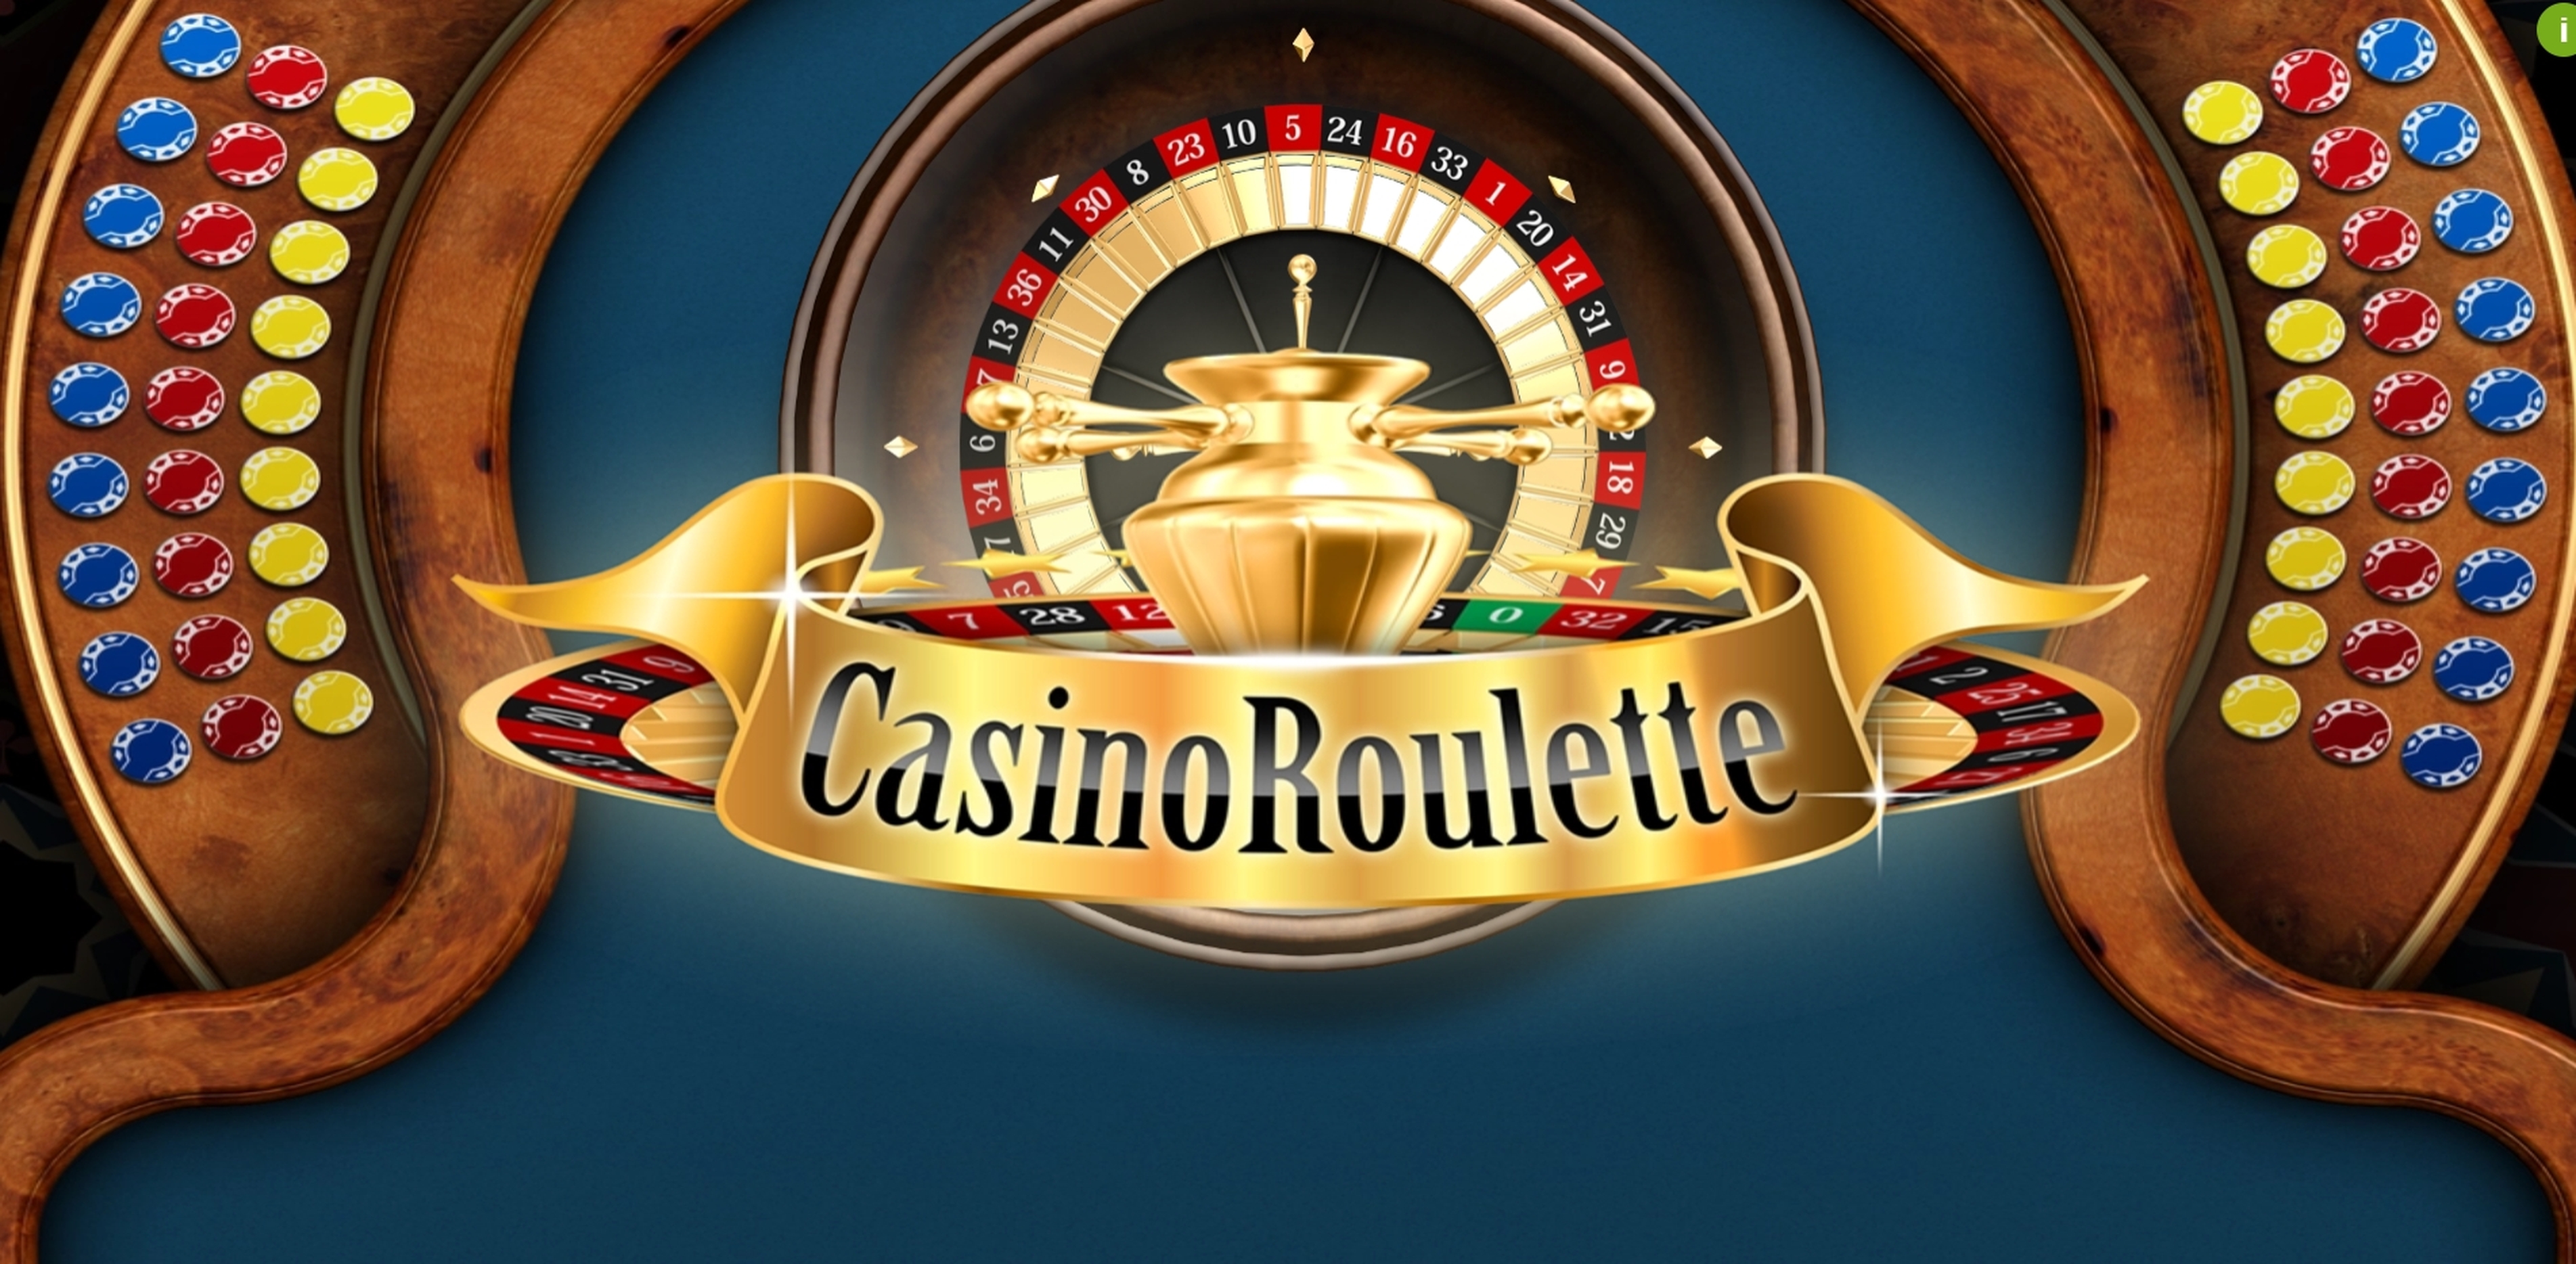 Play Casino Roulette Free Casino Slot Game by Wazdan